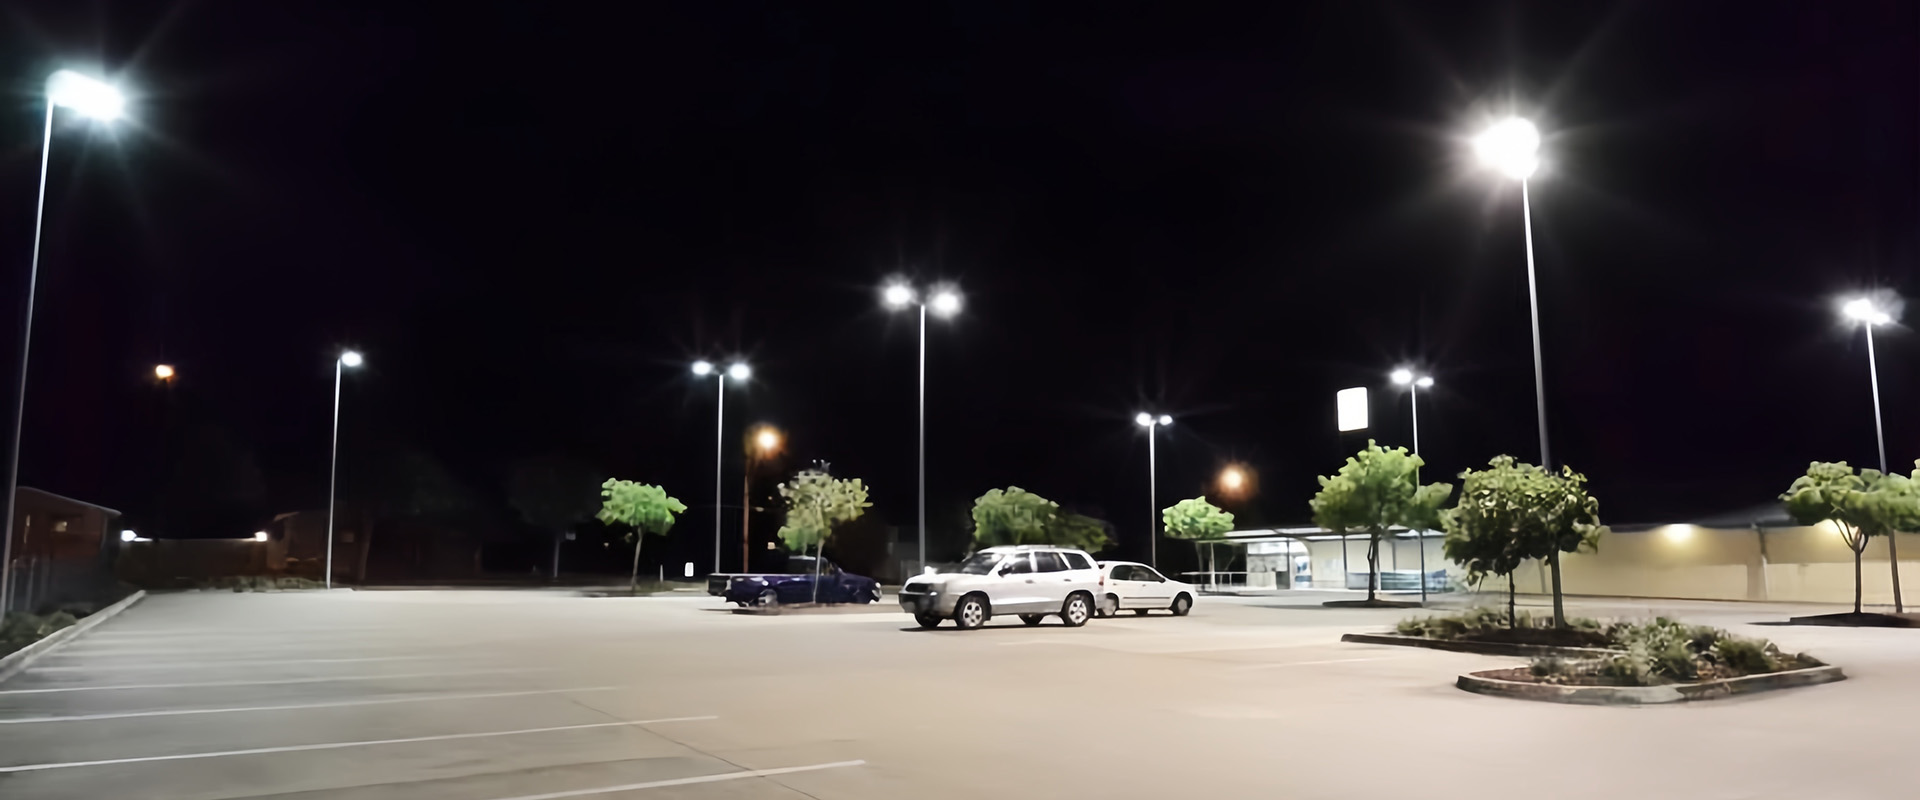 LED parking lighting